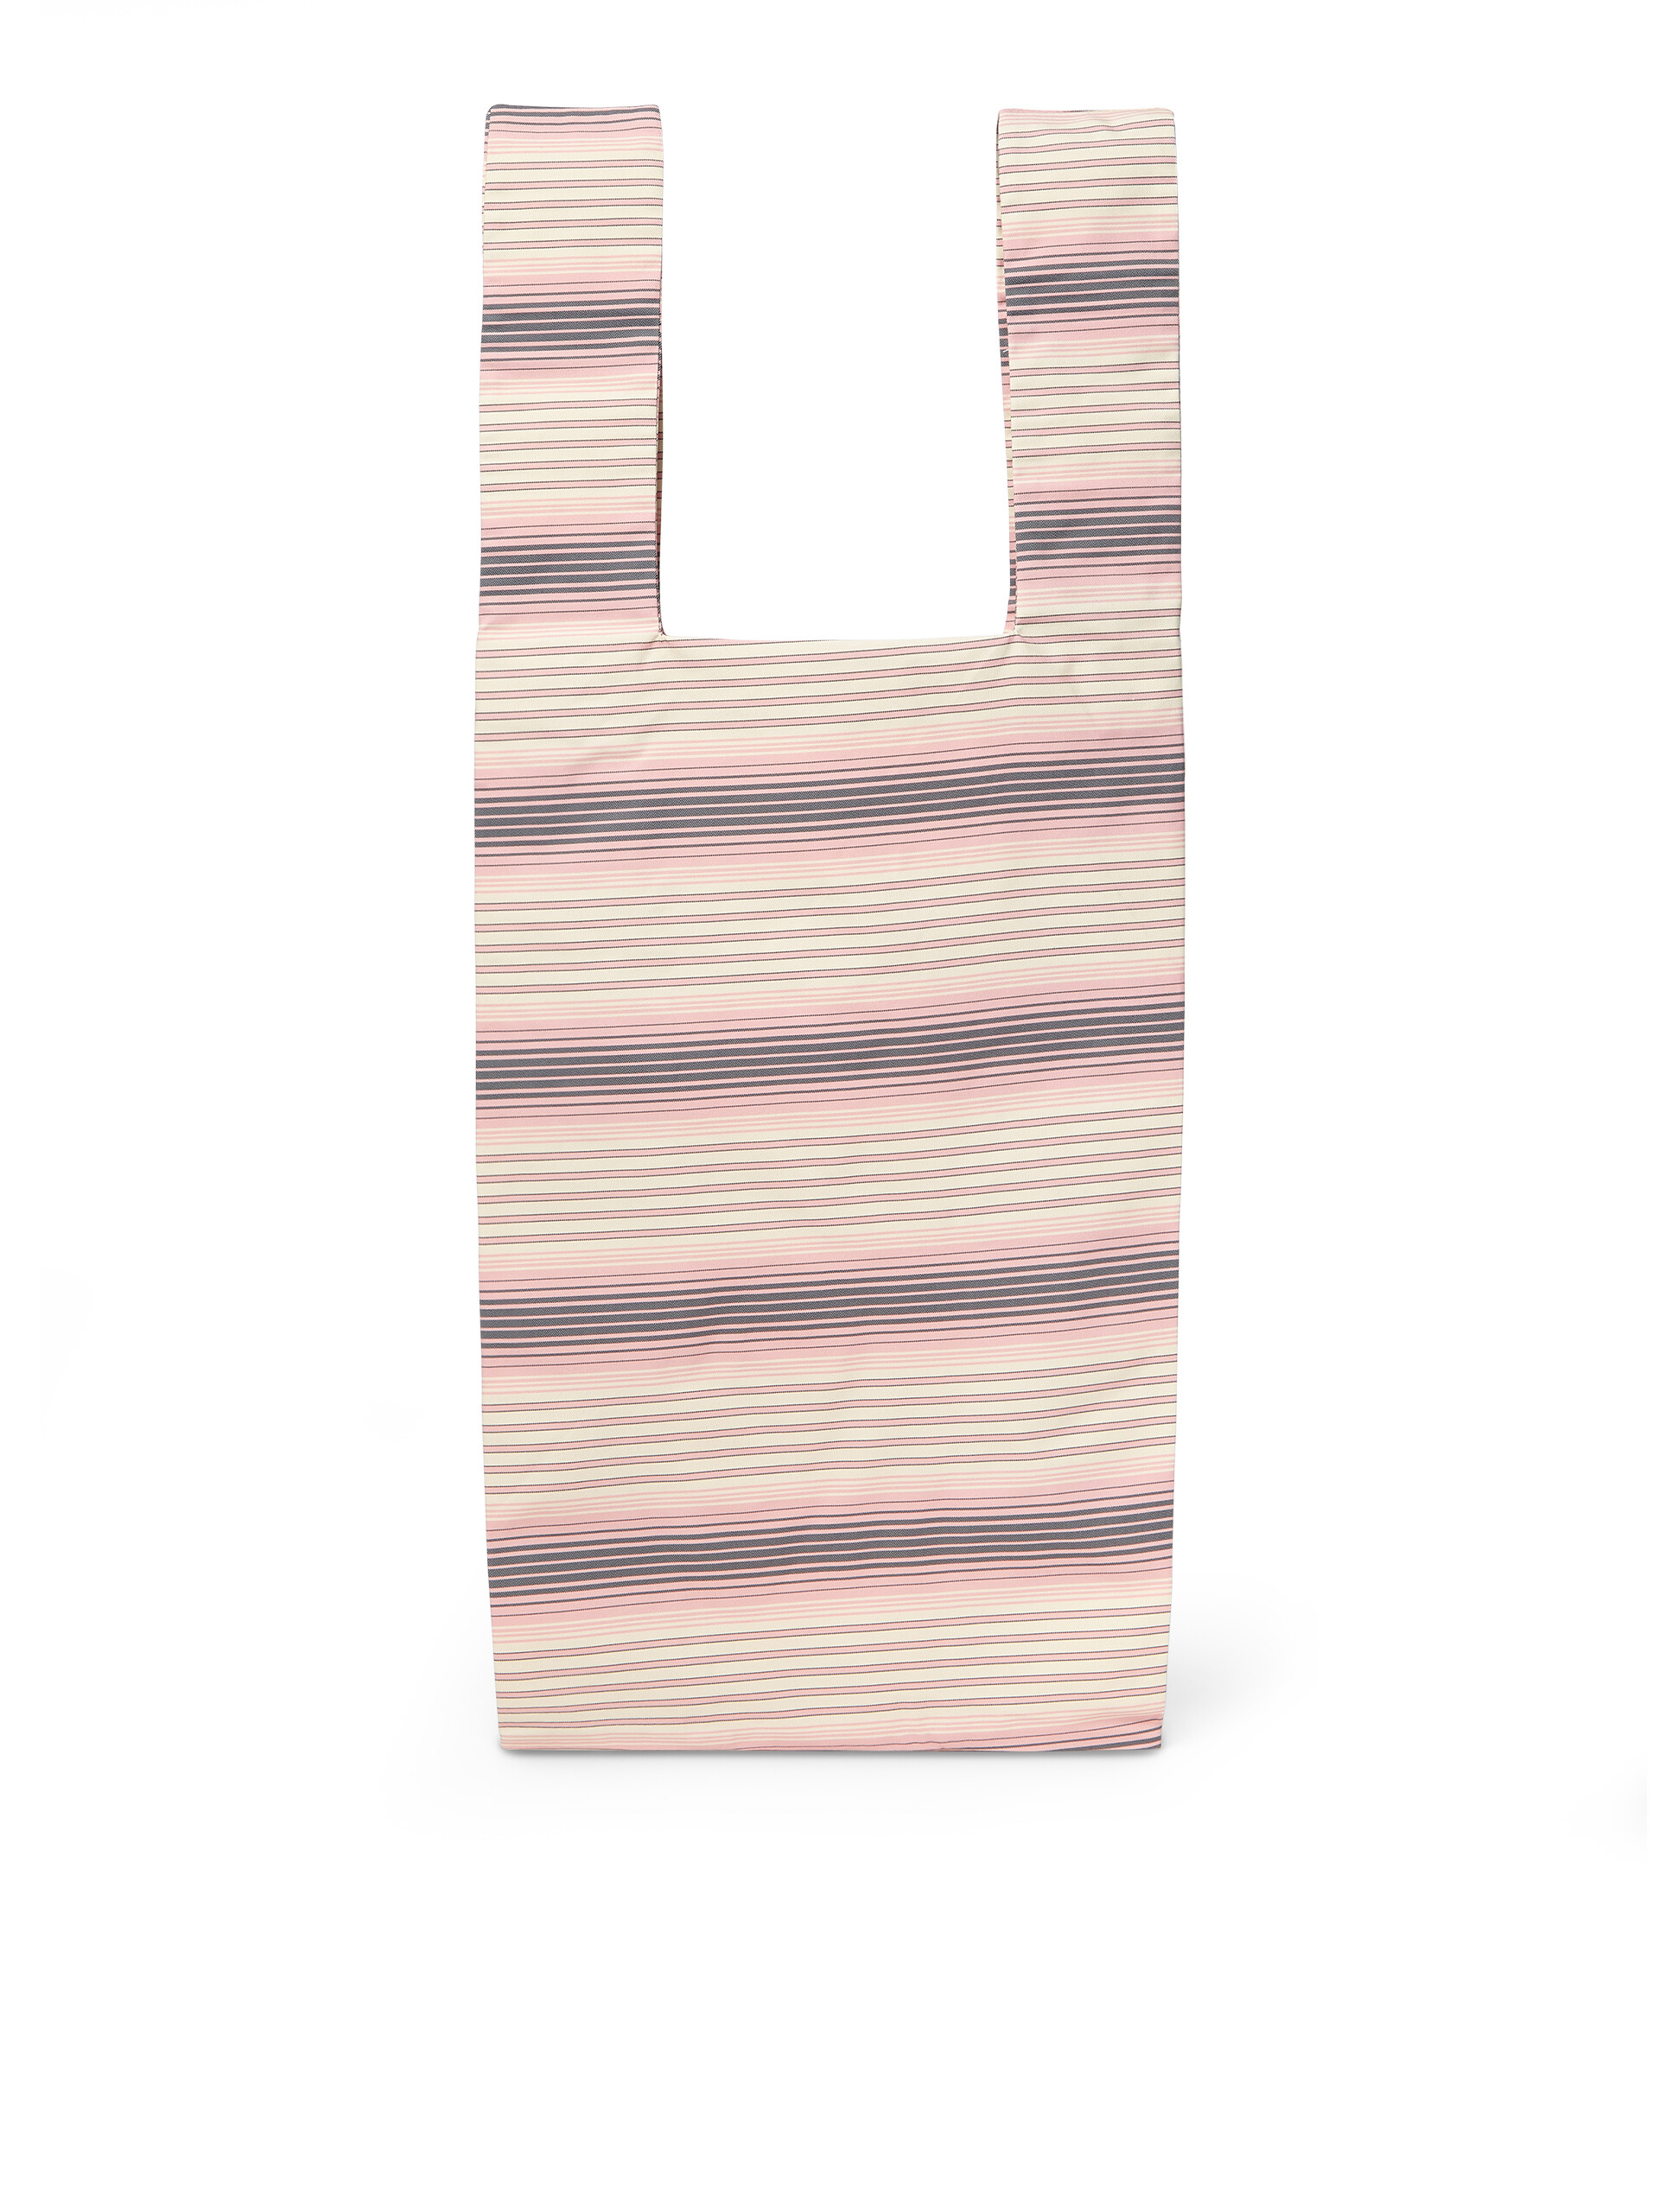 MARNI MARKET shopping bag with pink horizontal striped print - Bags - Image 3